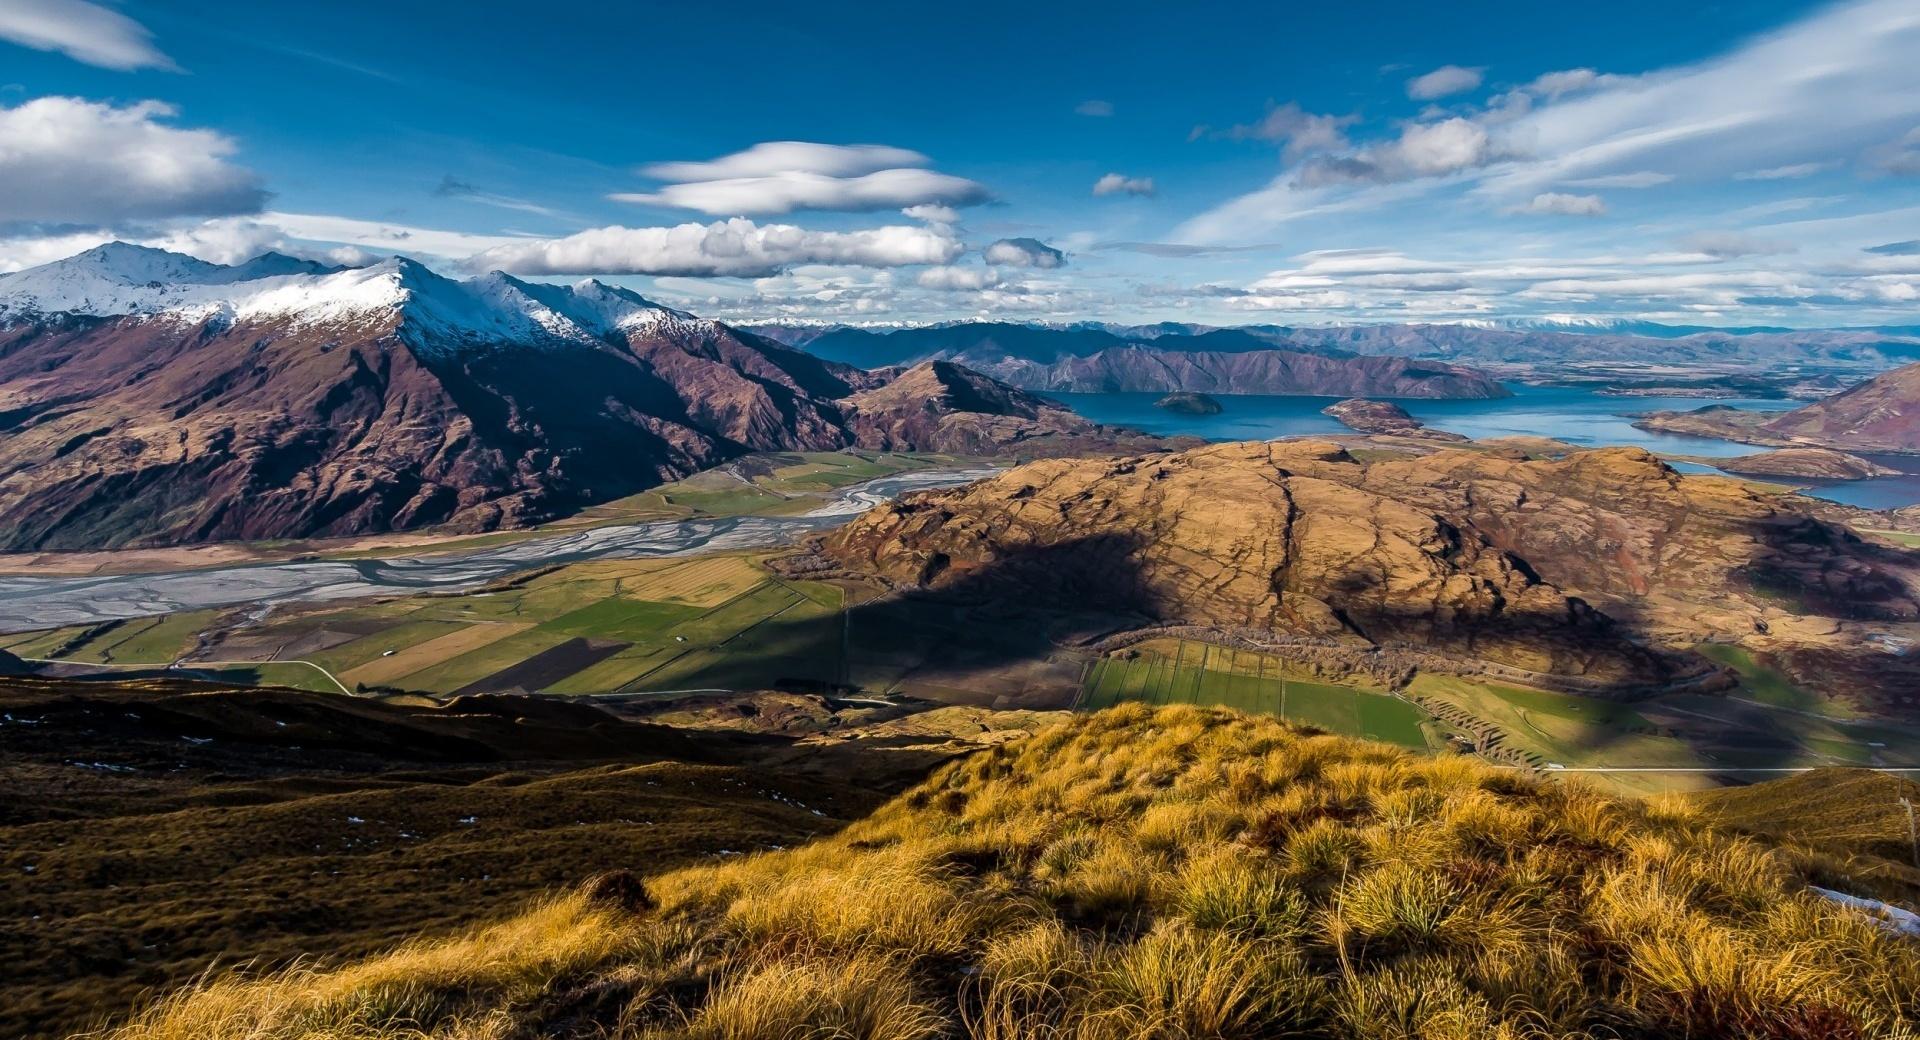 Landscape Of Wanaka New Zealand at 1024 x 1024 iPad size wallpapers HD quality